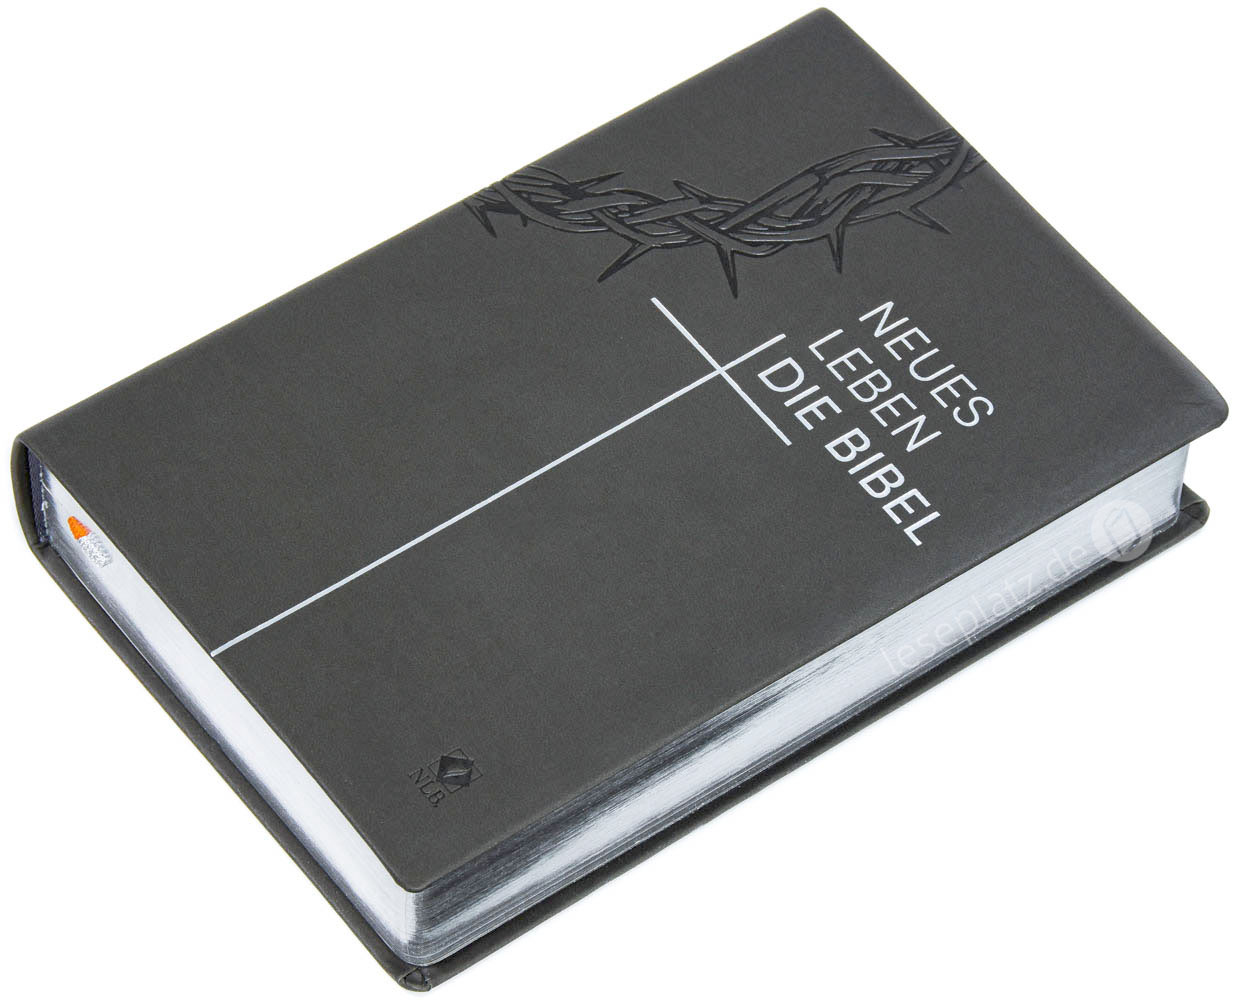 Neues Leben. Die Bibel - Standardausgabe - Kunstleder grau/ Silberschnitt